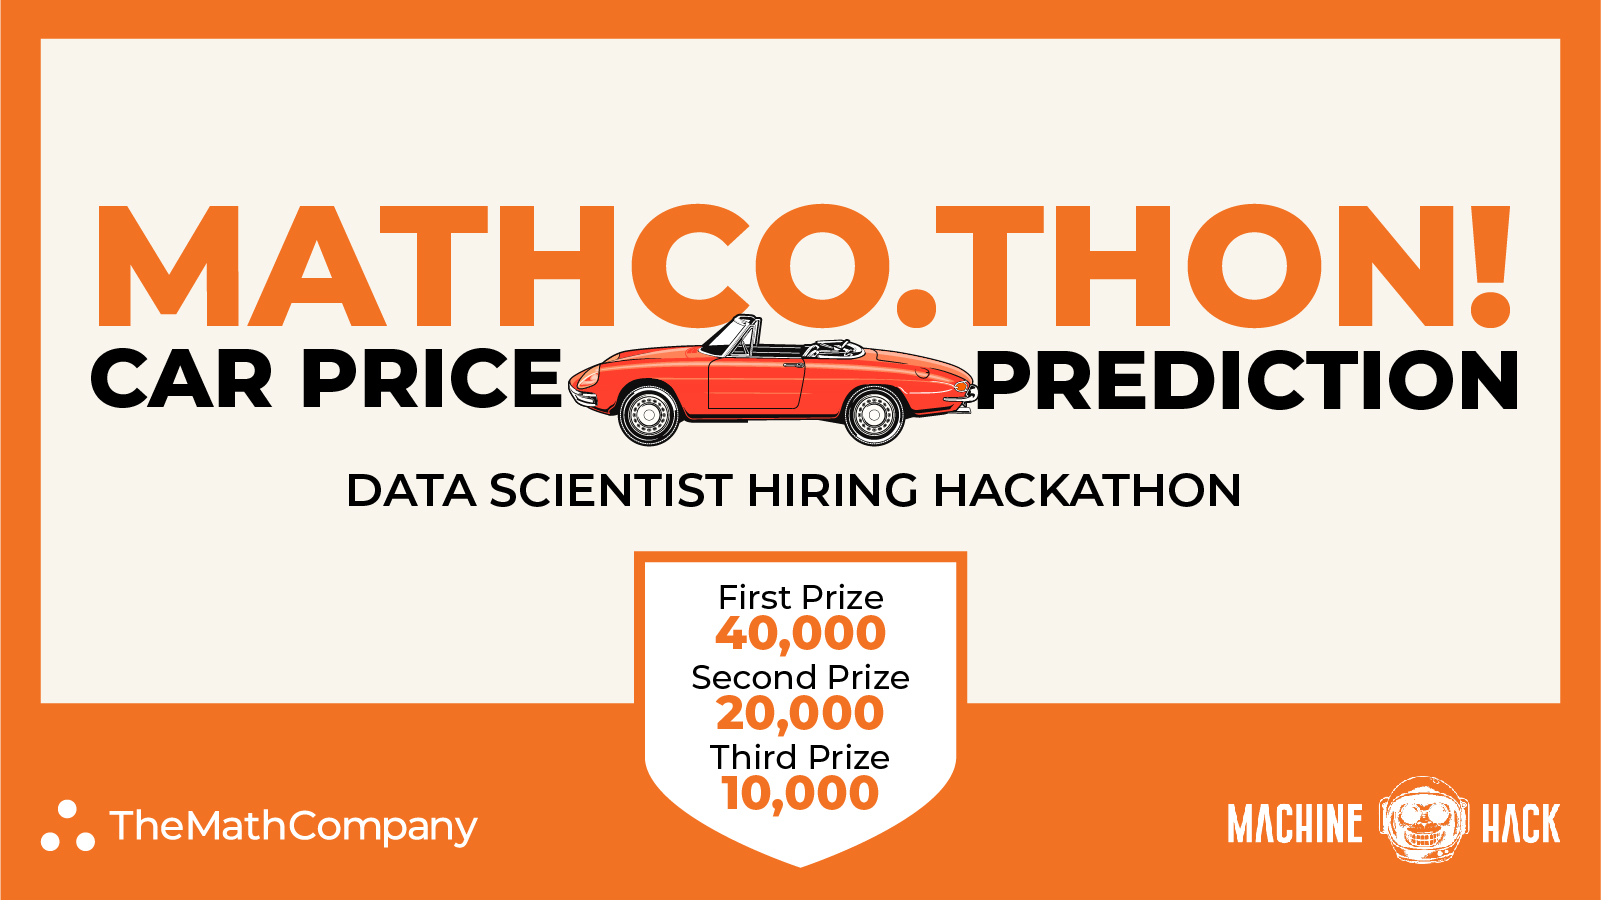 MATHCO.THON: The Data Scientist Hiring Hackathon by TheMathCompany